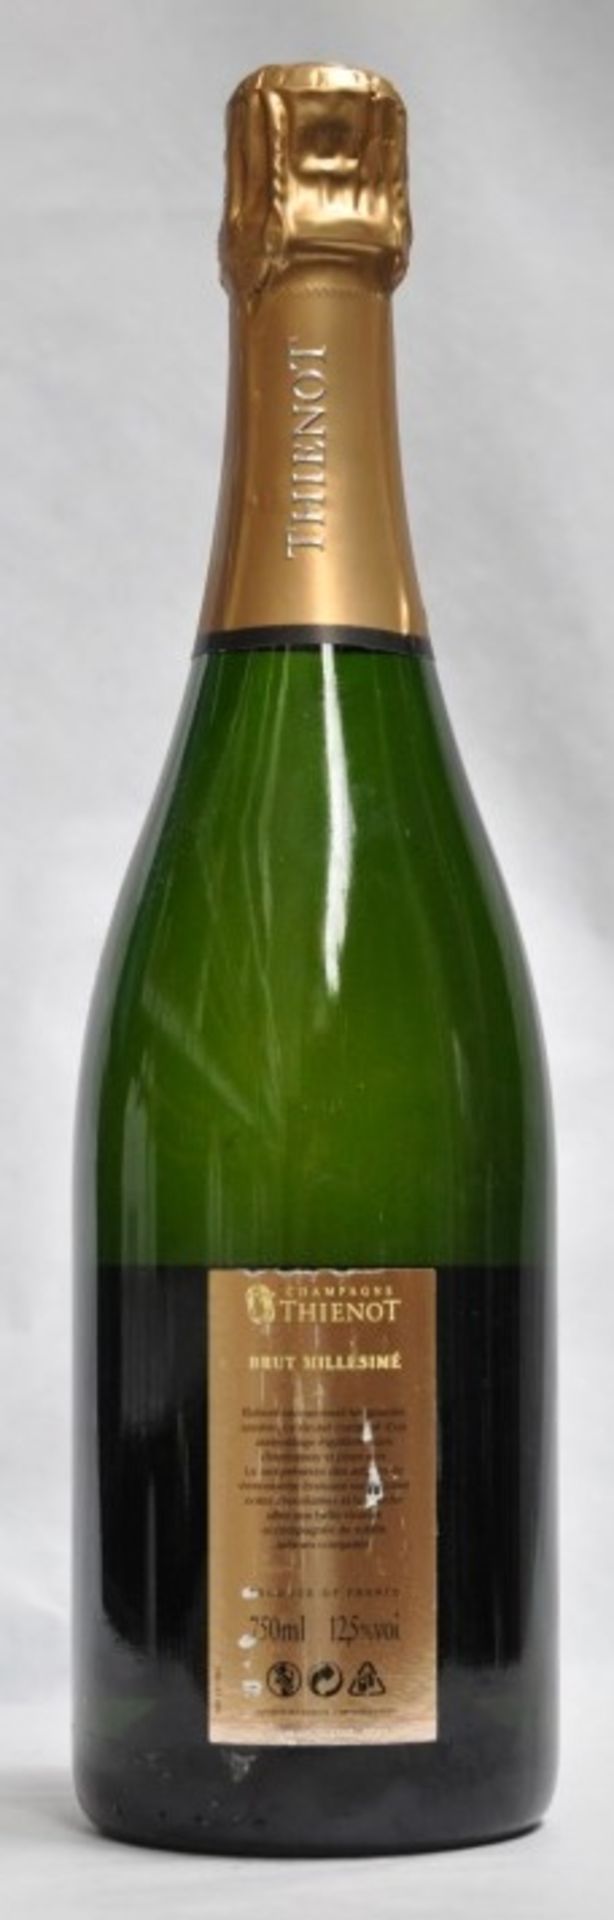 1 x Thienot Brut, Champagne, France – Bottle Size 75cl – 2000 – Volume 12.5% - Ref W1209 - CL101 - - Image 2 of 4